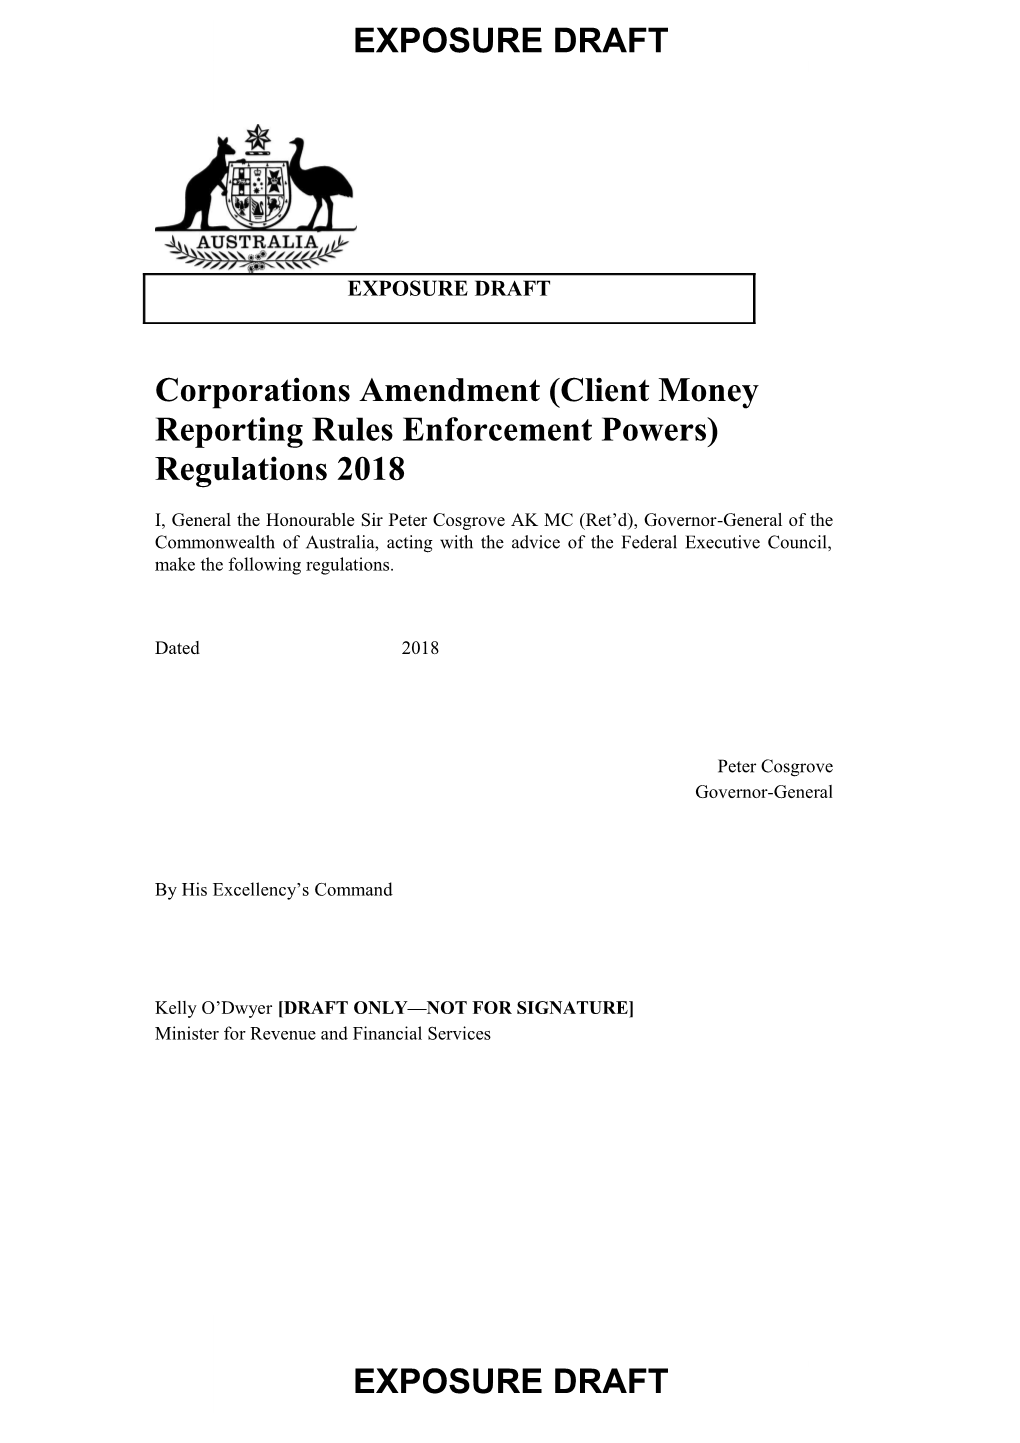 Corporations Amendment (Client Money Reporting Rules Enforcement Powers) Regulations 2018